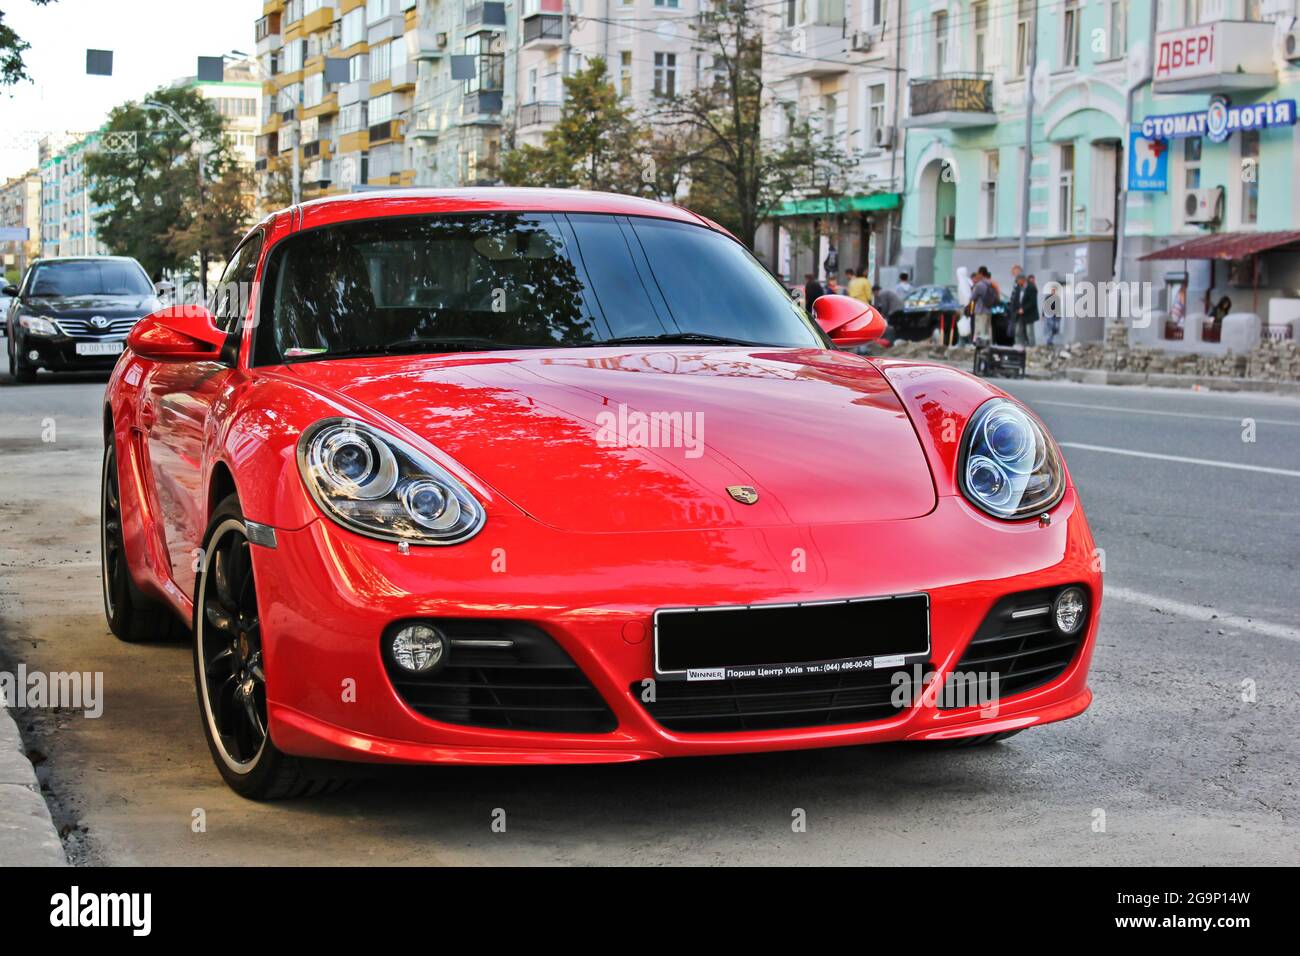 Kiev, Ukraine - July 3, 2013: Red Porsche Cayman S parked in the city Stock Photo